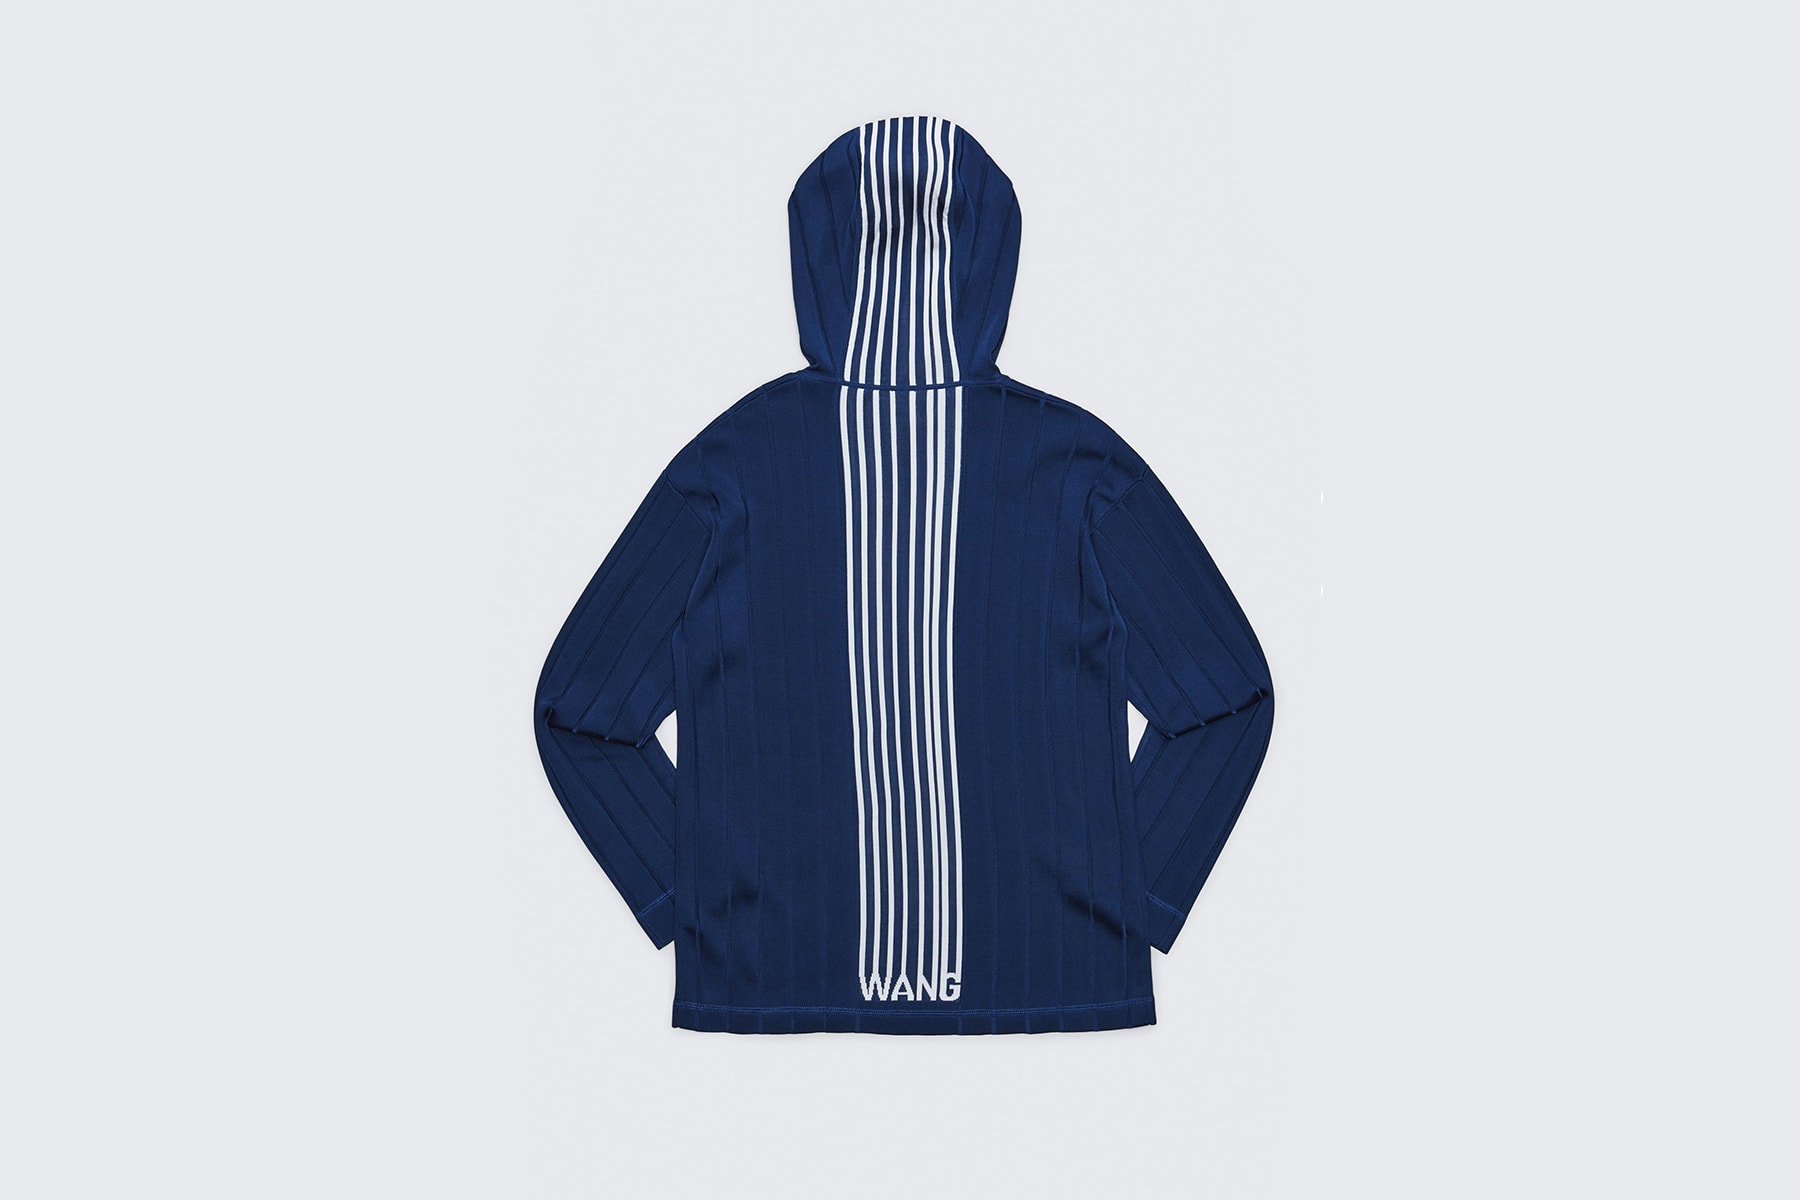 alexander wang barcode capsule collection hoodies track pants crop tops tees